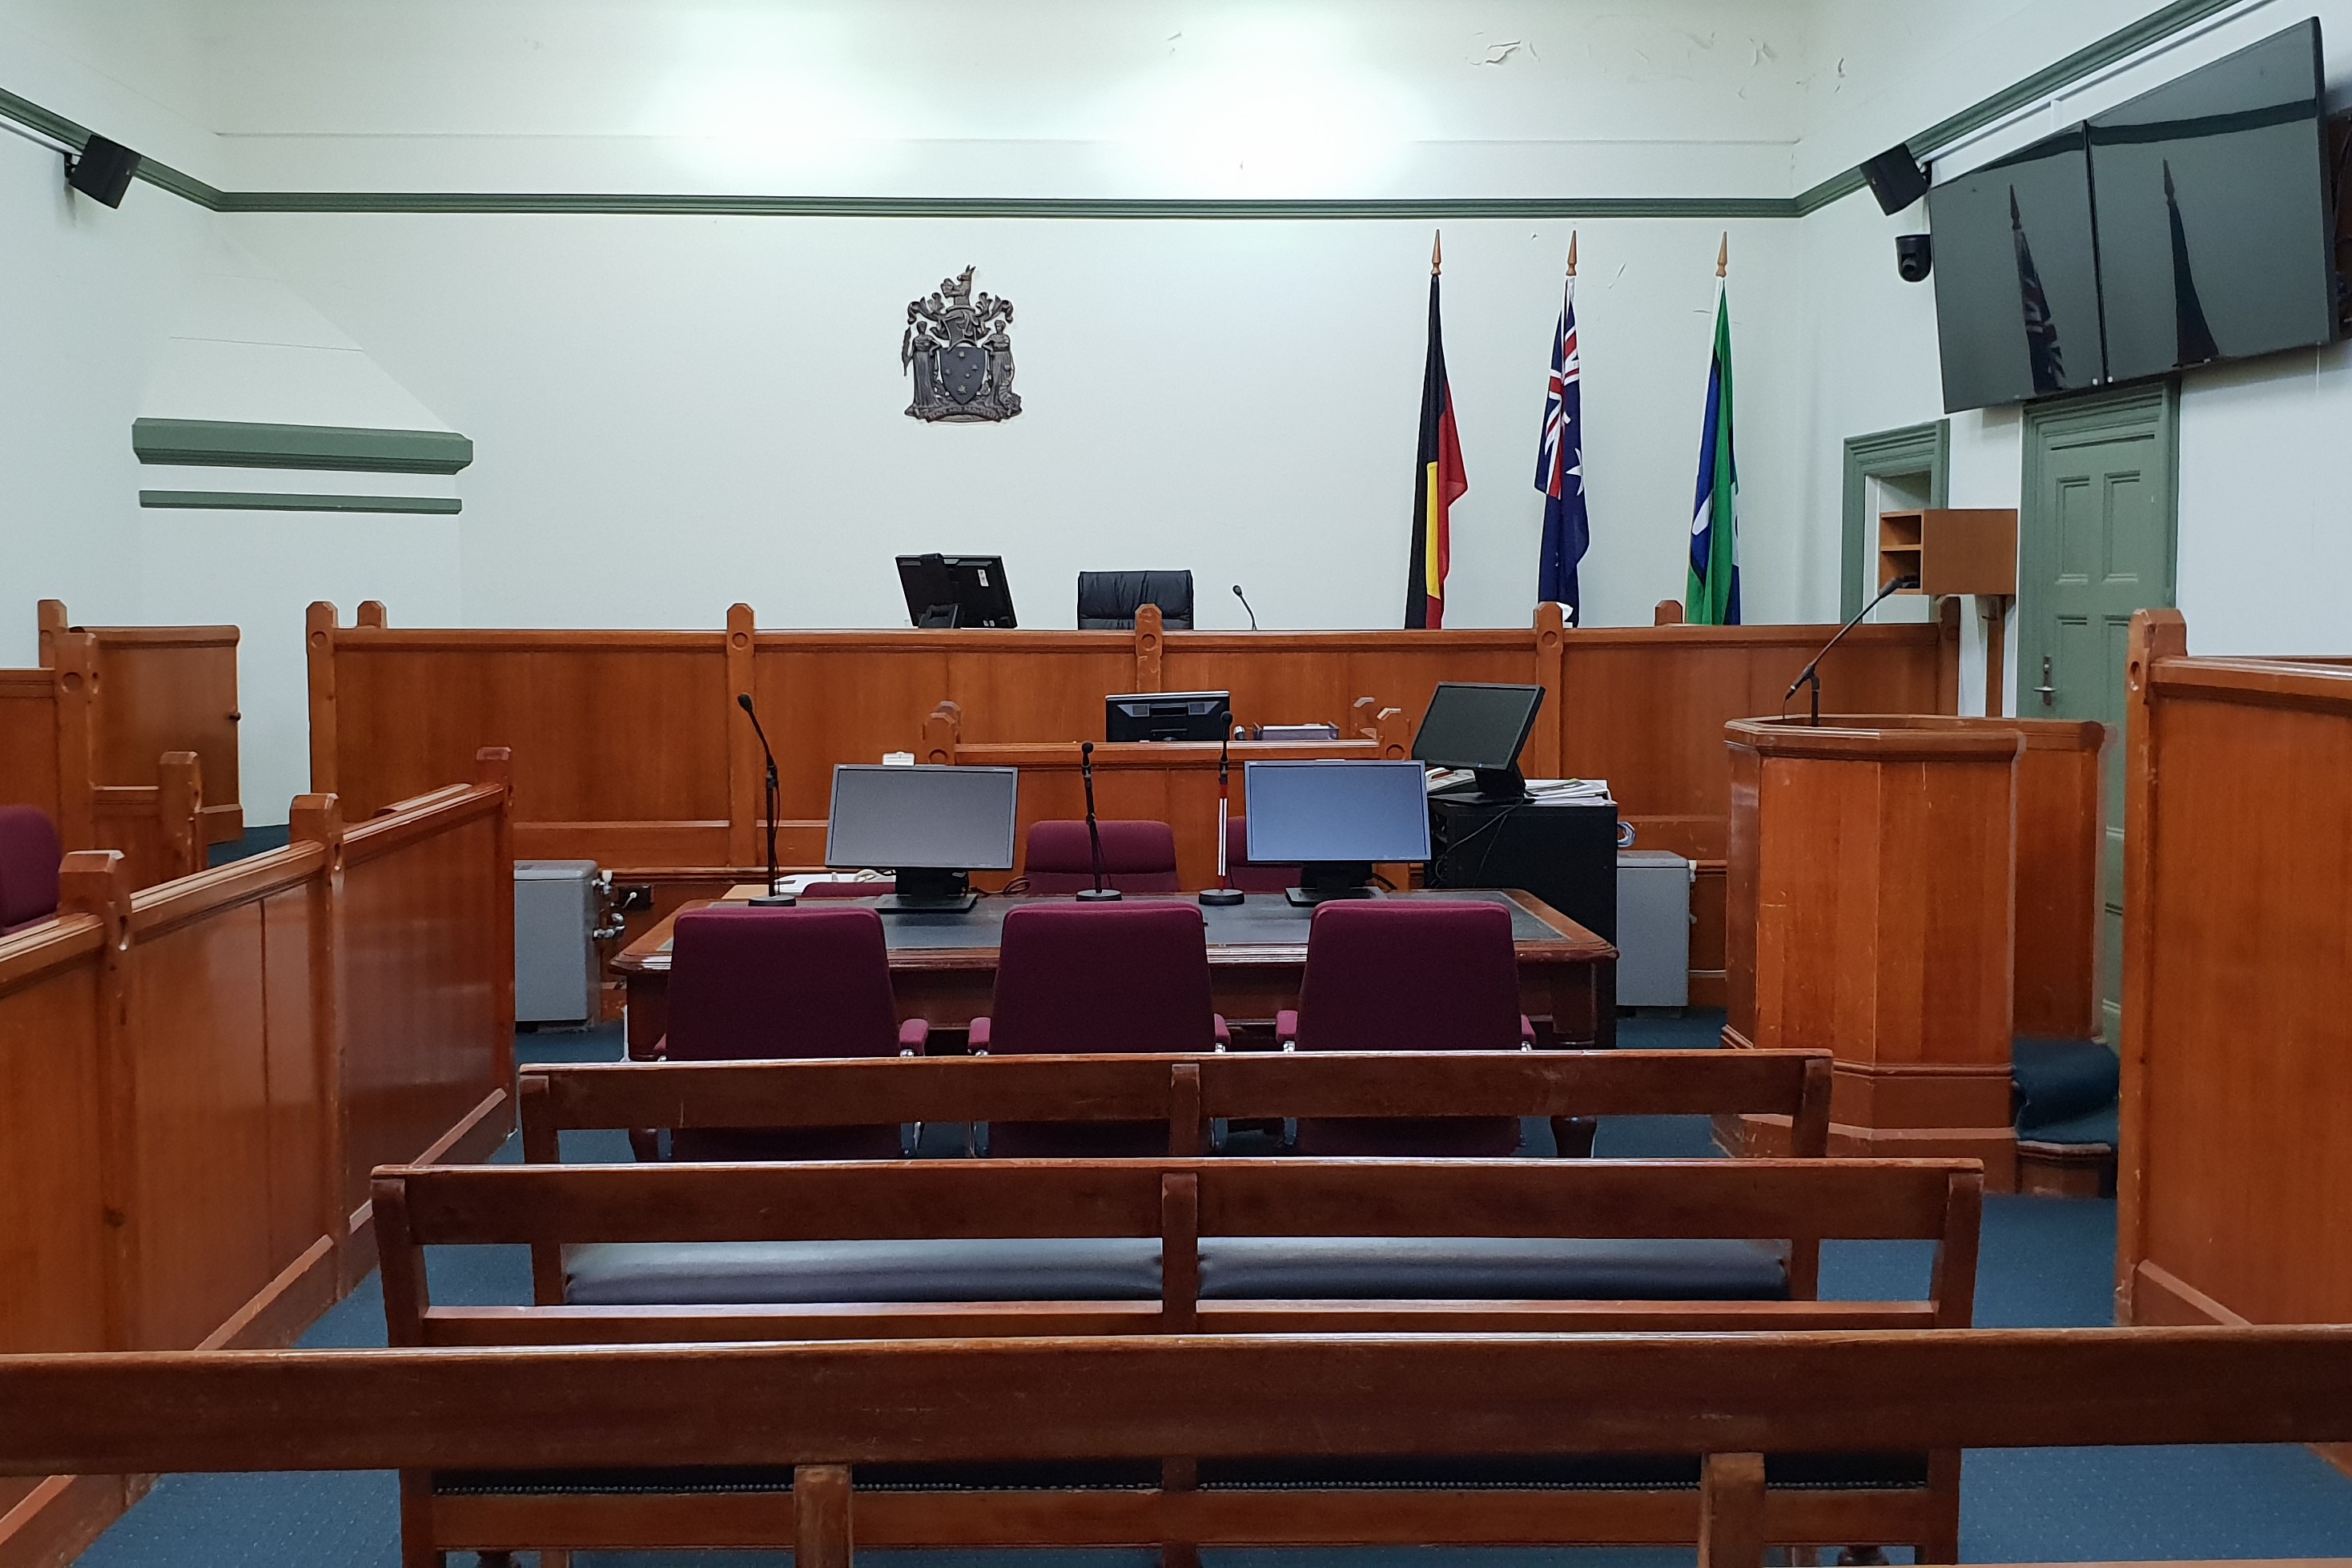 Courtroom inside Hamilton Magistrates' Court